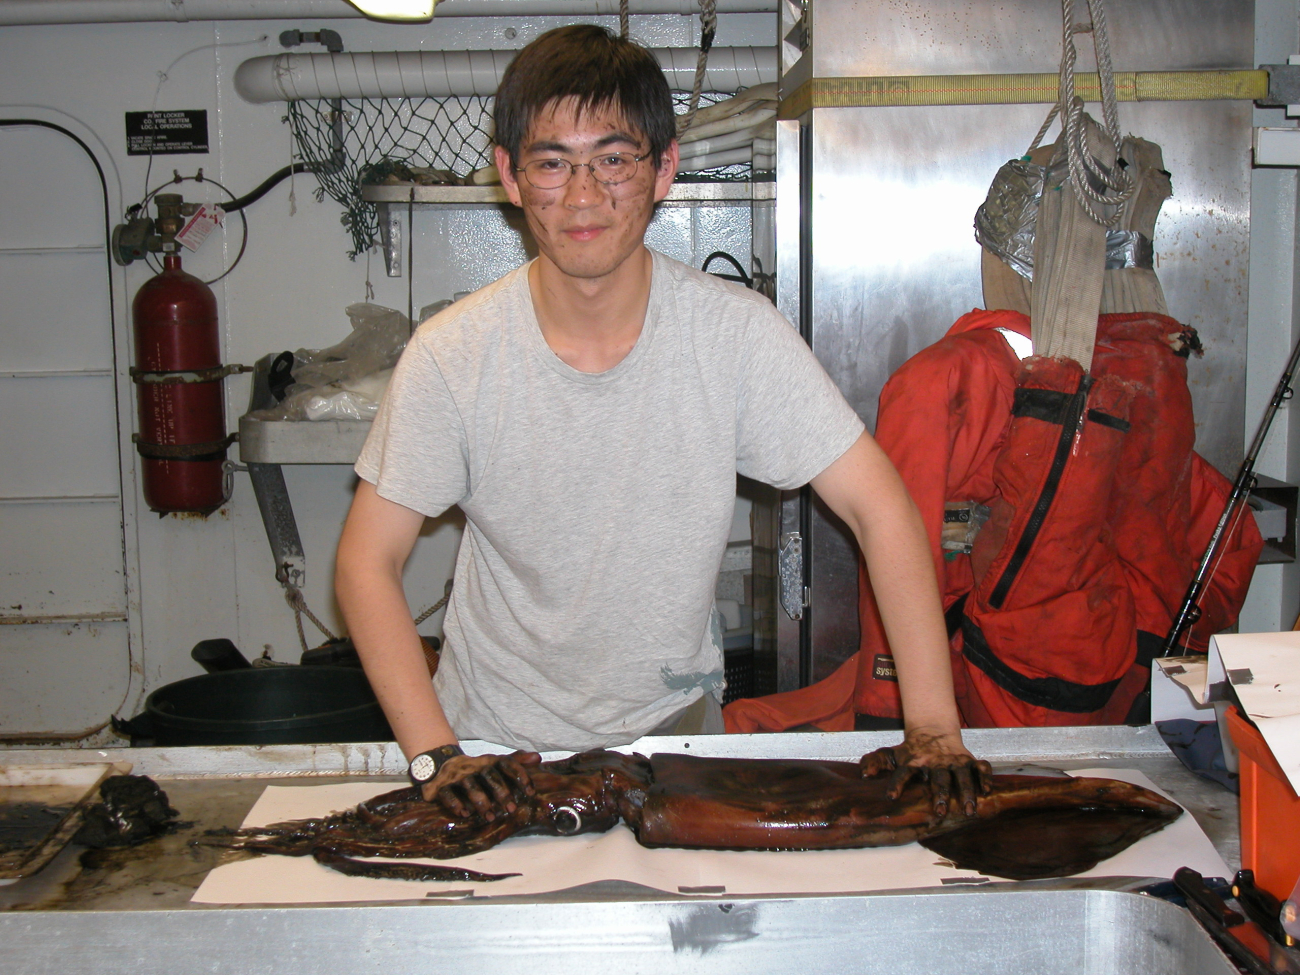 Preparing gyatoku - Japanese fish prints, in this caseattempting to produce prints of squid